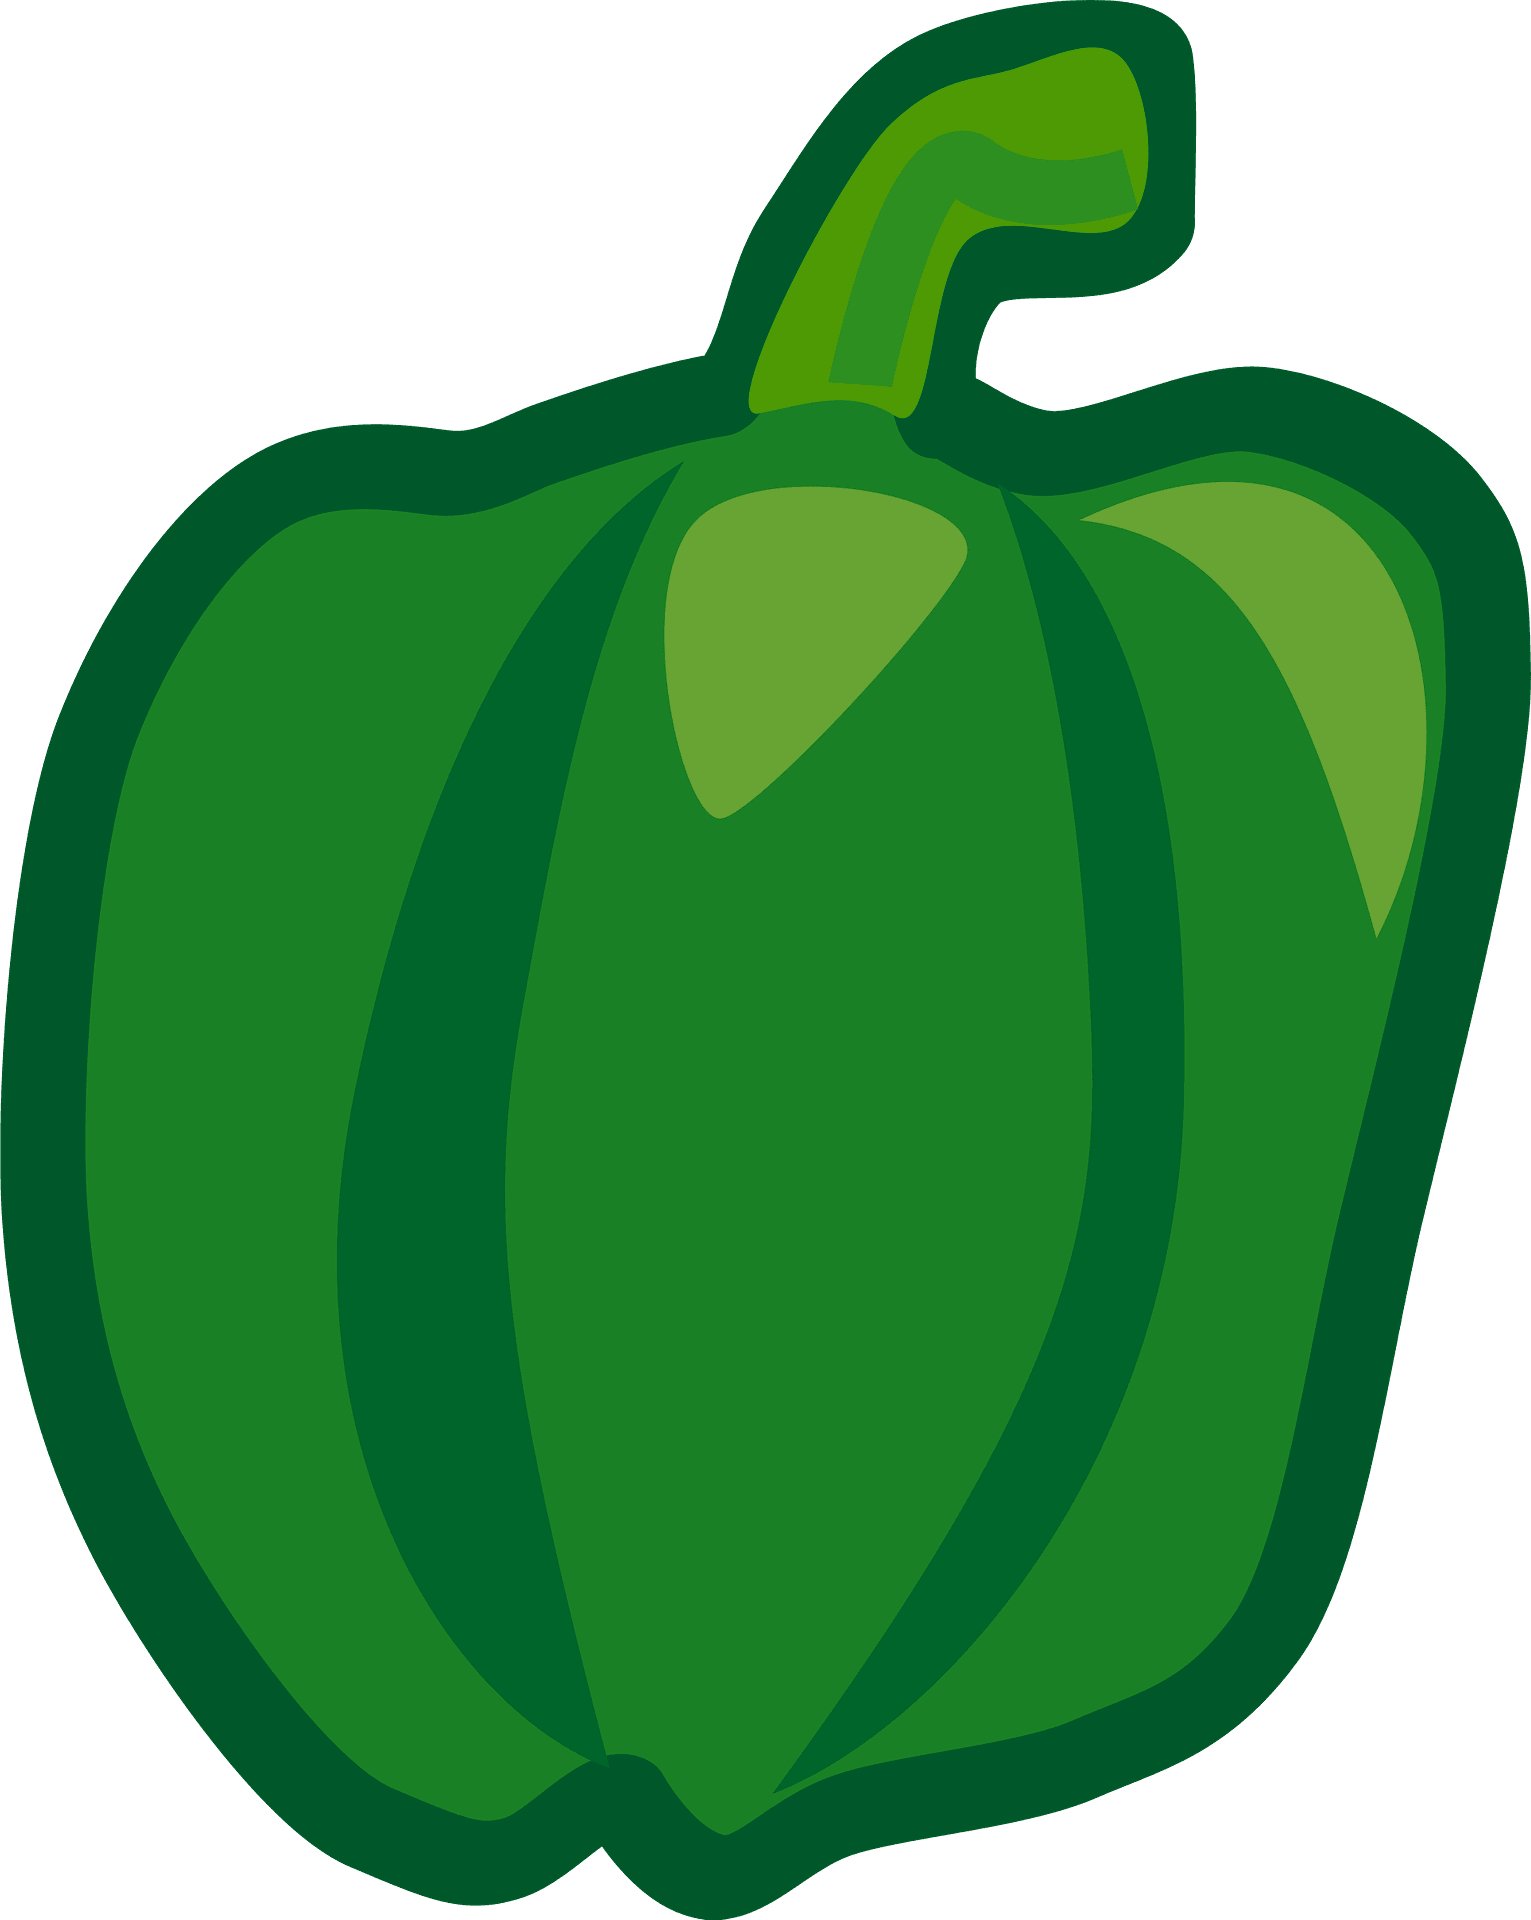 Download PNG image - Vector Green Bell Pepper PNG Transparent Image 